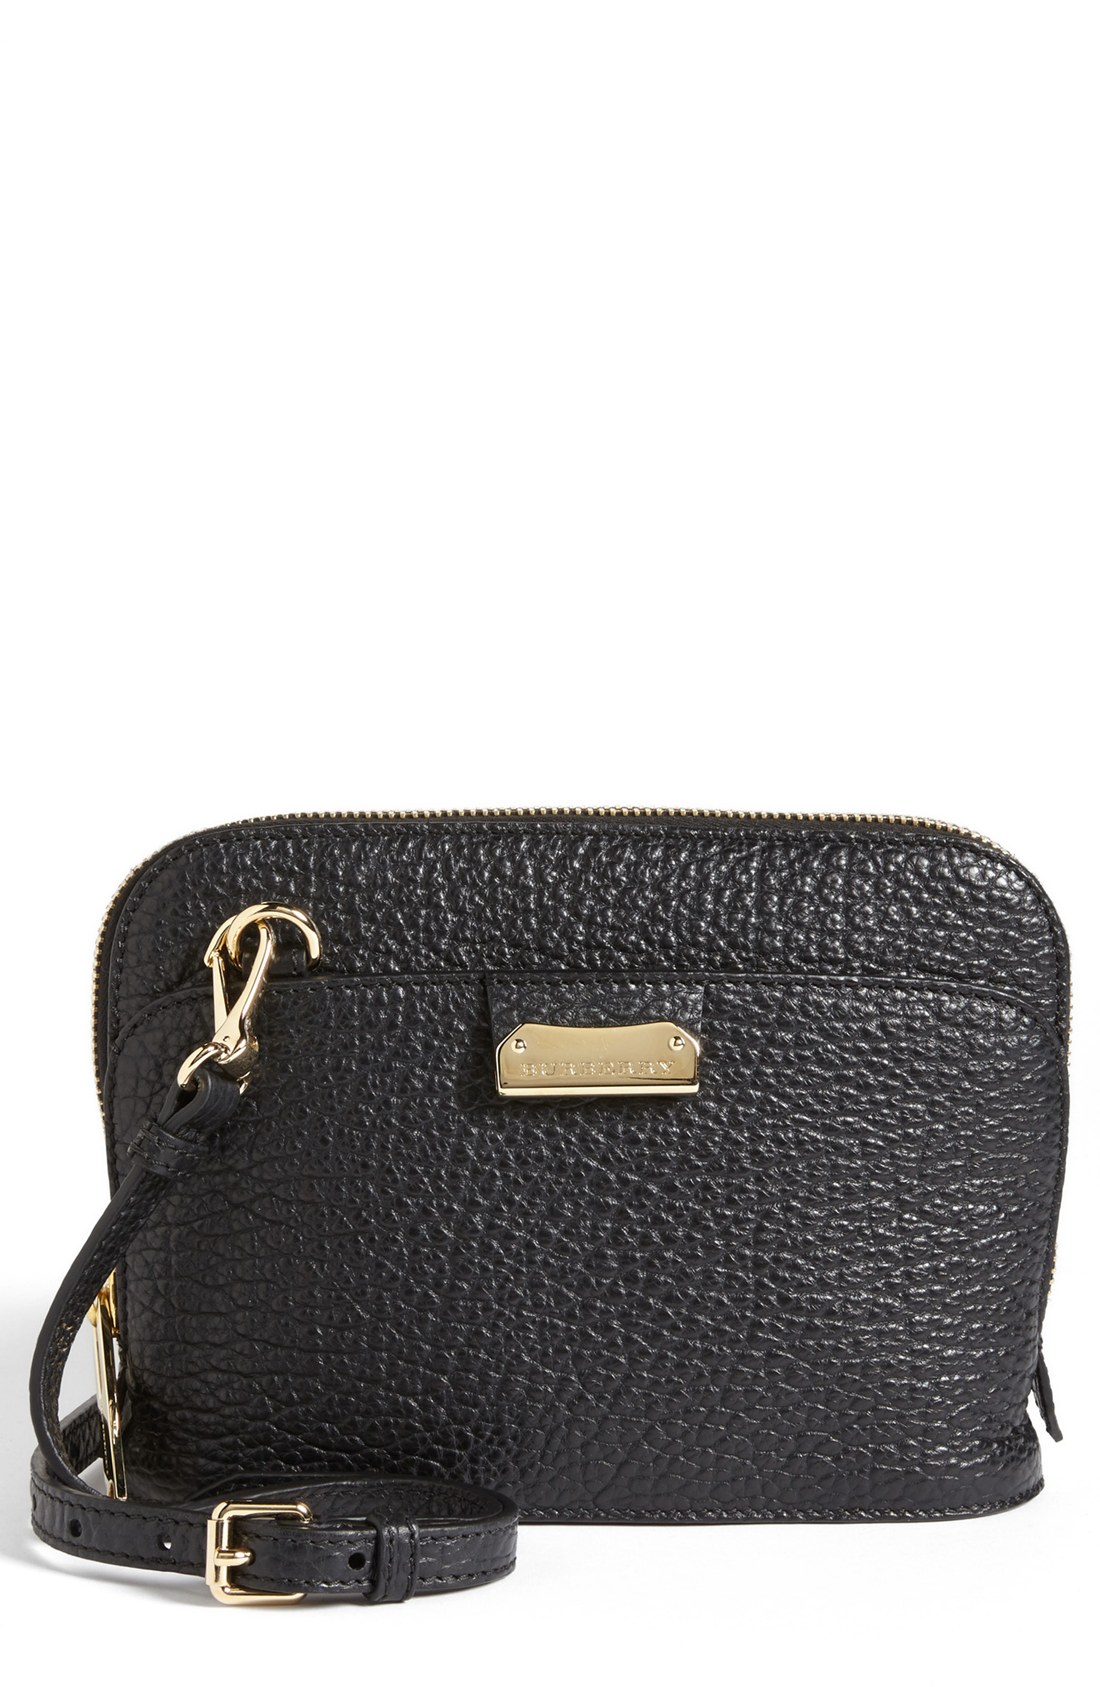 Burberry 'Small Harrogate' Leather Crossbody Bag in Black | Lyst